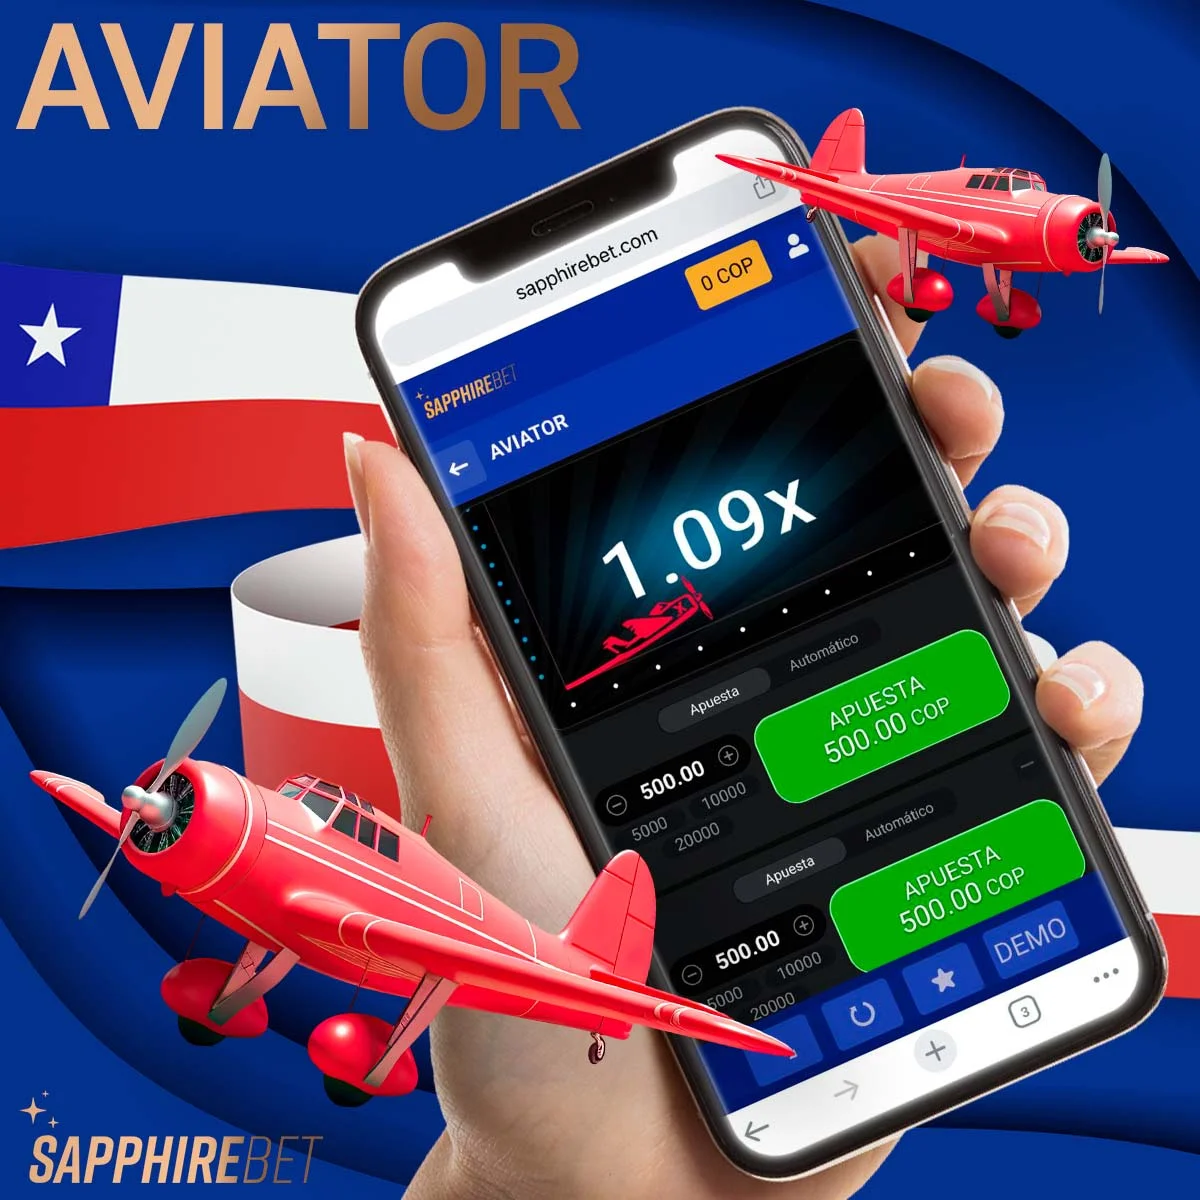 Reseña del popular juego Aviator en Sapphirebet en Chile